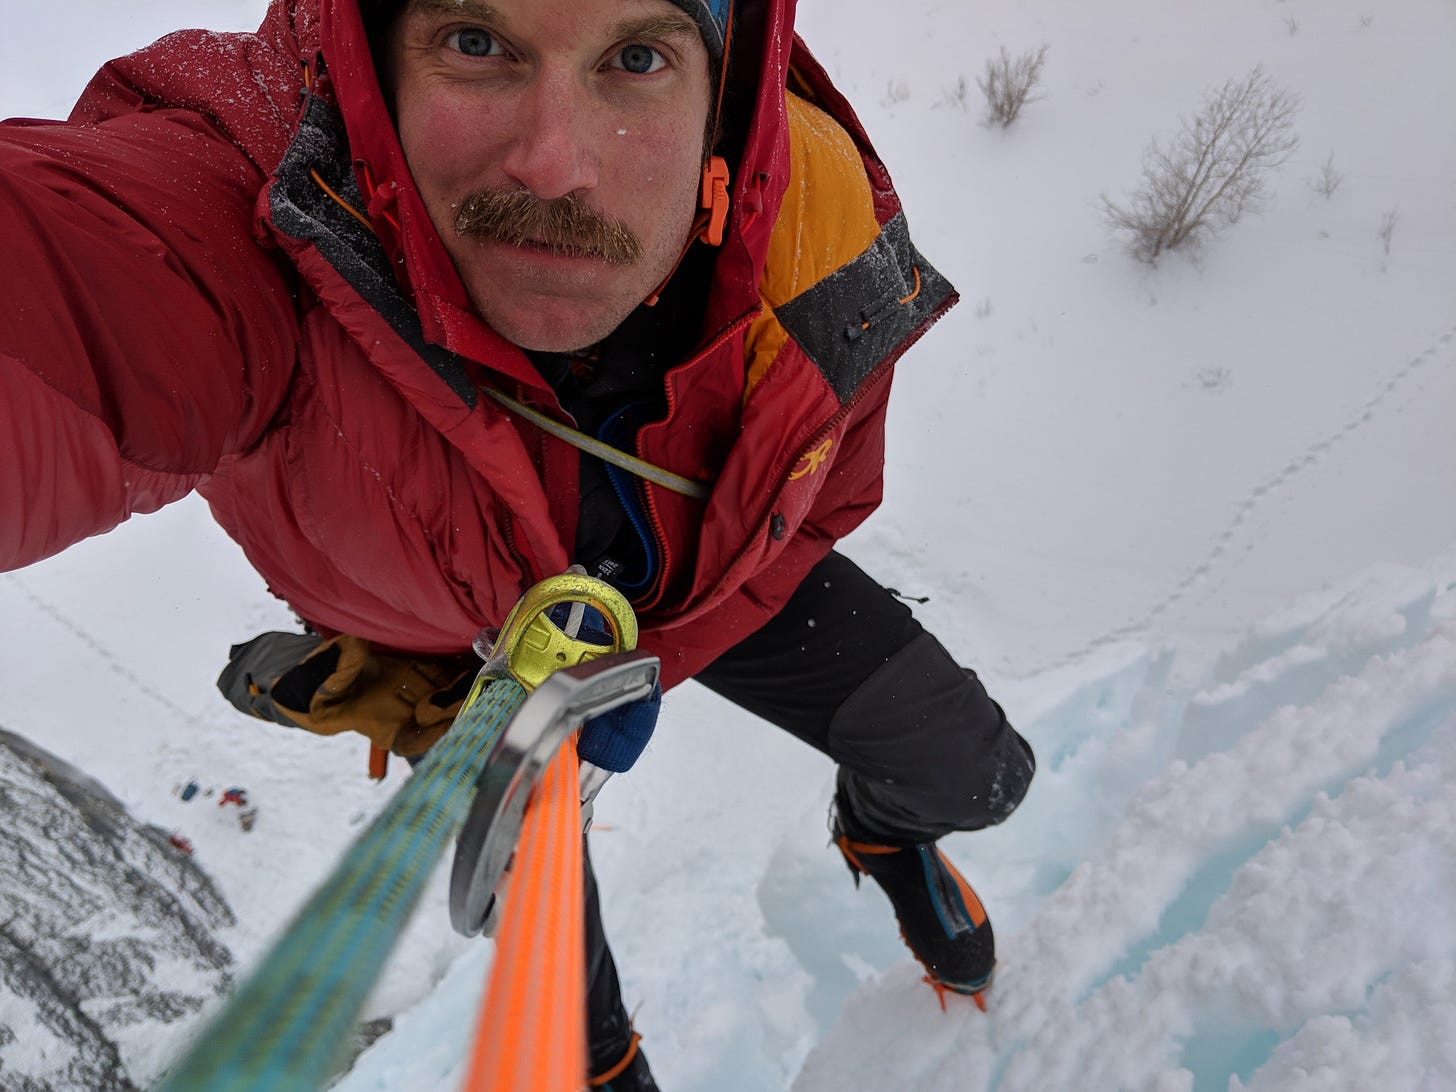 Graham climbing in Canada